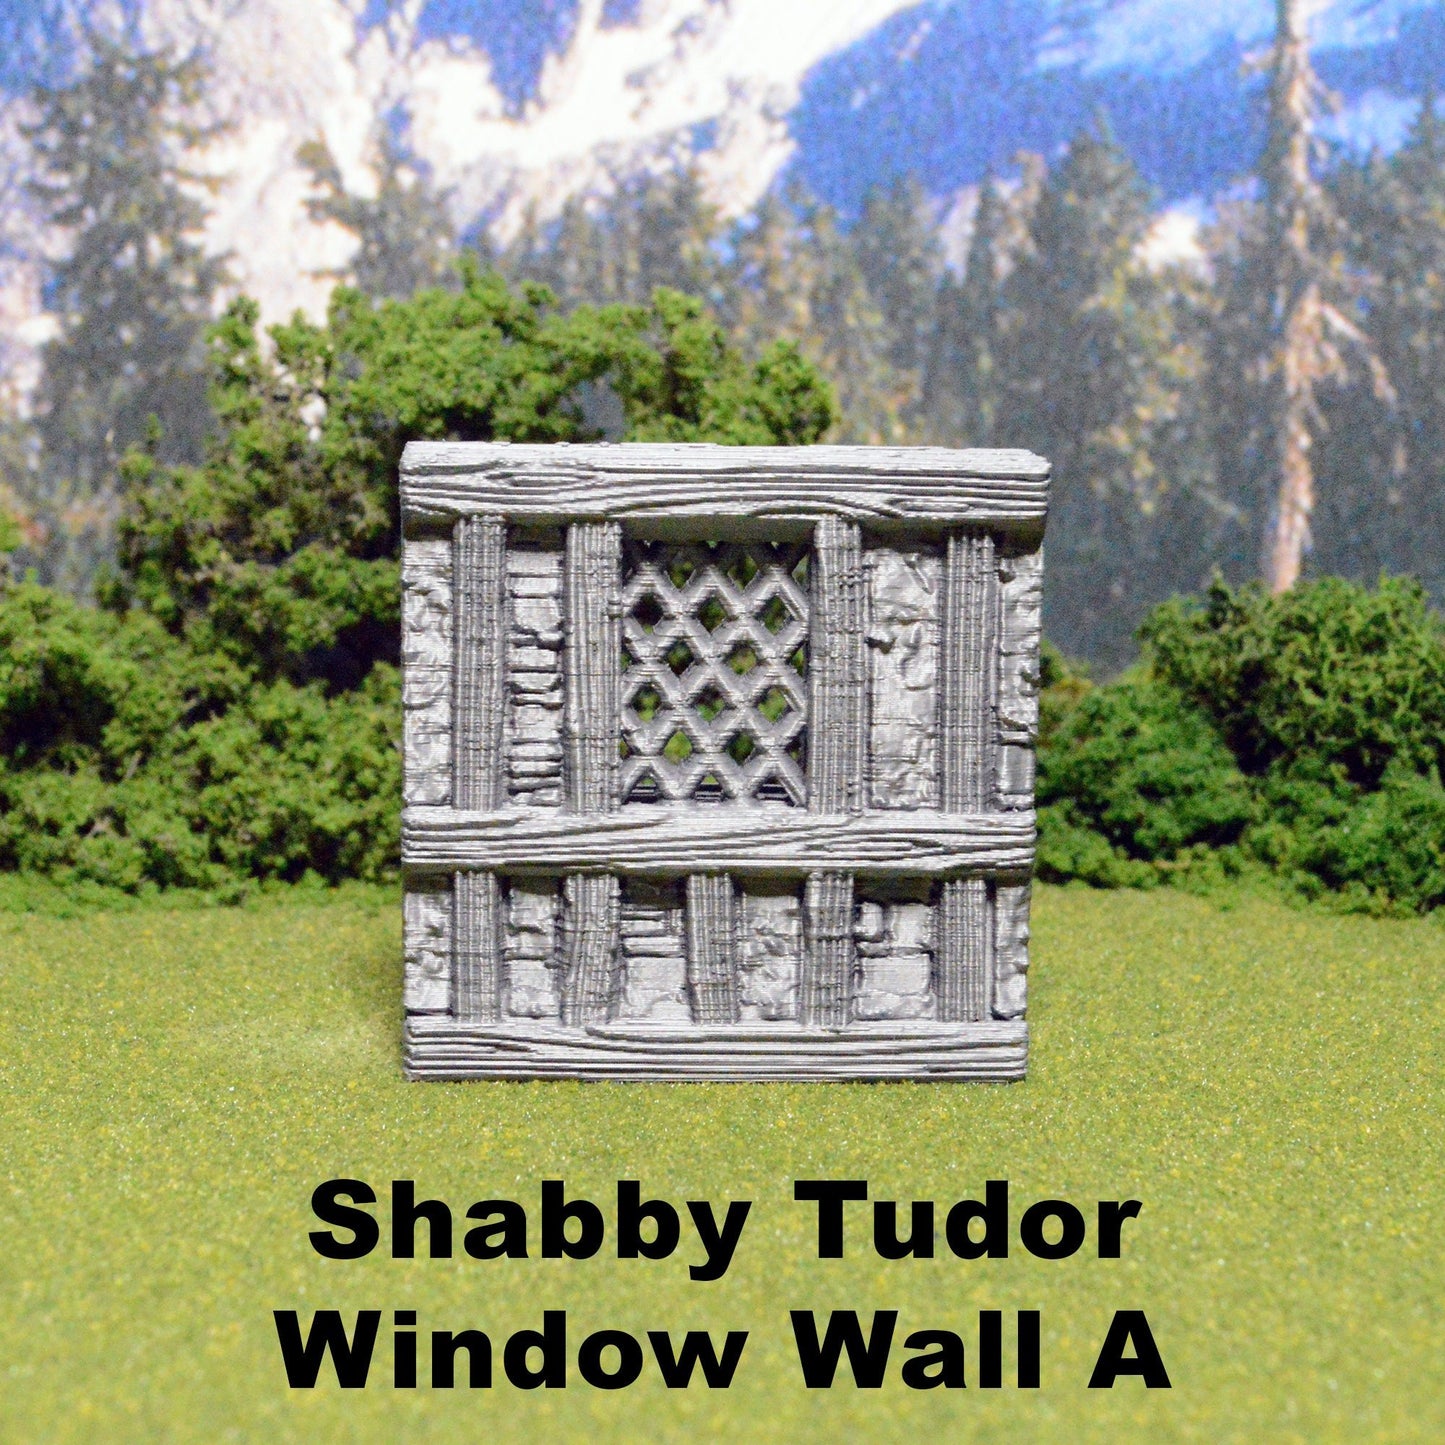 Shabby Tudor Window Wall Tiles 28mm for D&D Terrain, Modular OpenLOCK Building Tiles, DnD Medieval Village Ramshackle Stone Wall Tiles